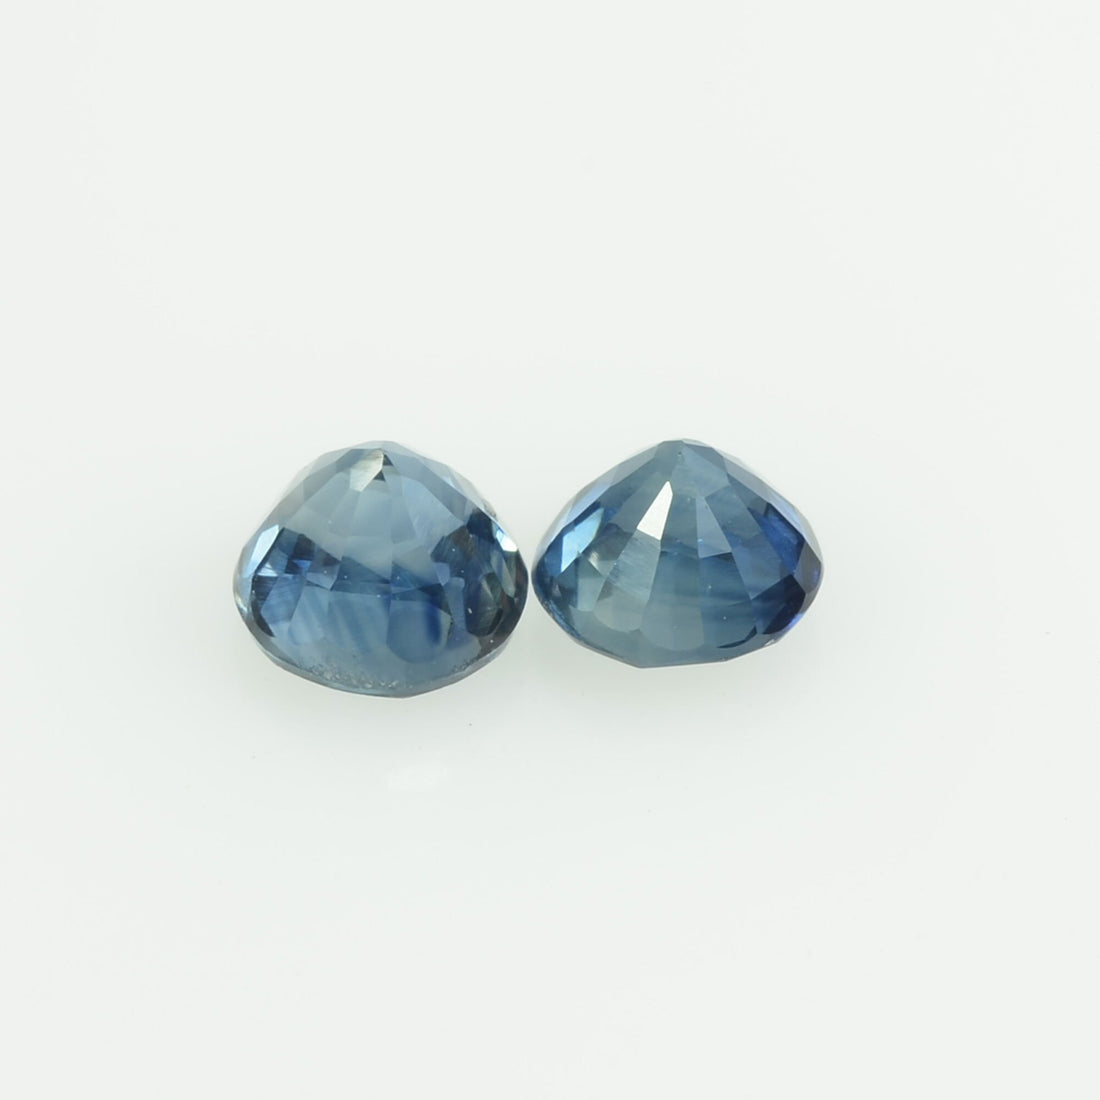 3.5 mmNatural Blue Sapphire Loose Gemstone Round Cut